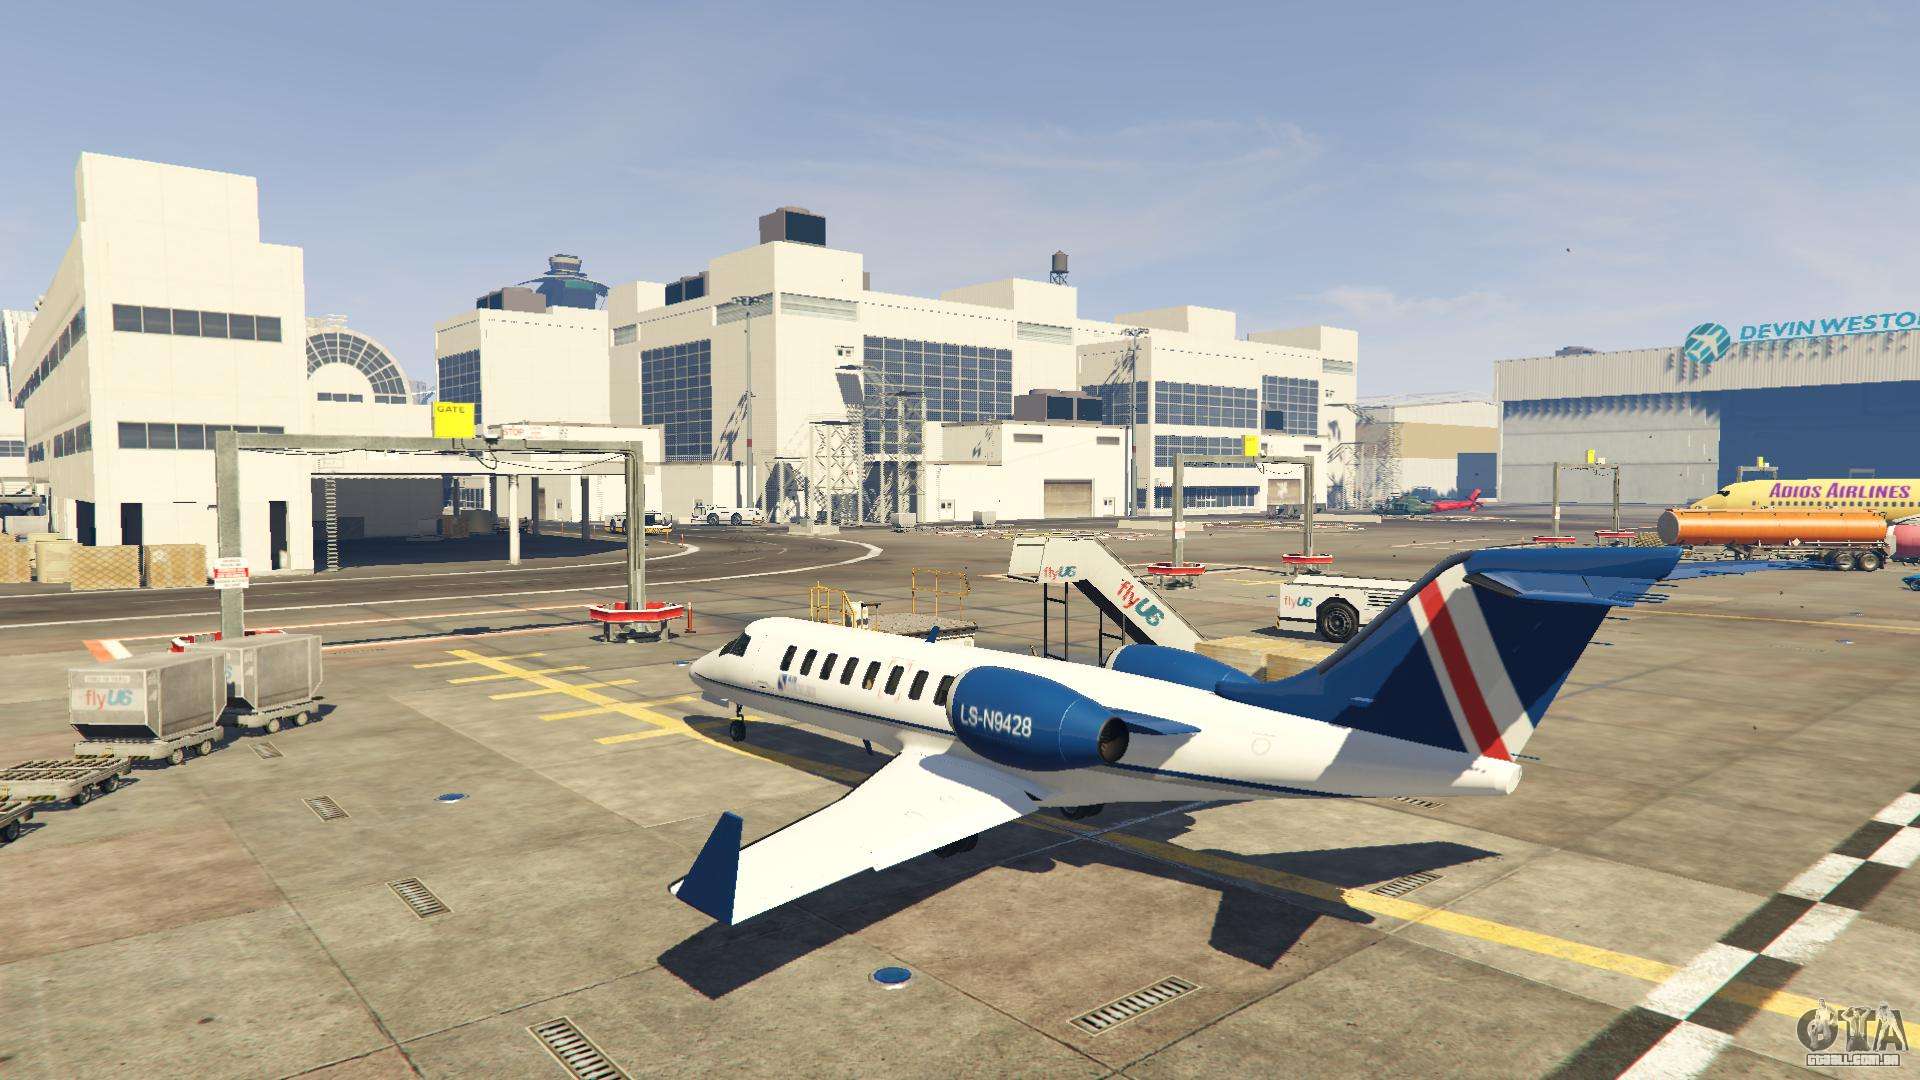 GTA V Online - Novo Local Secreto Próximo ao Aeroporto - GTA 5 PS3